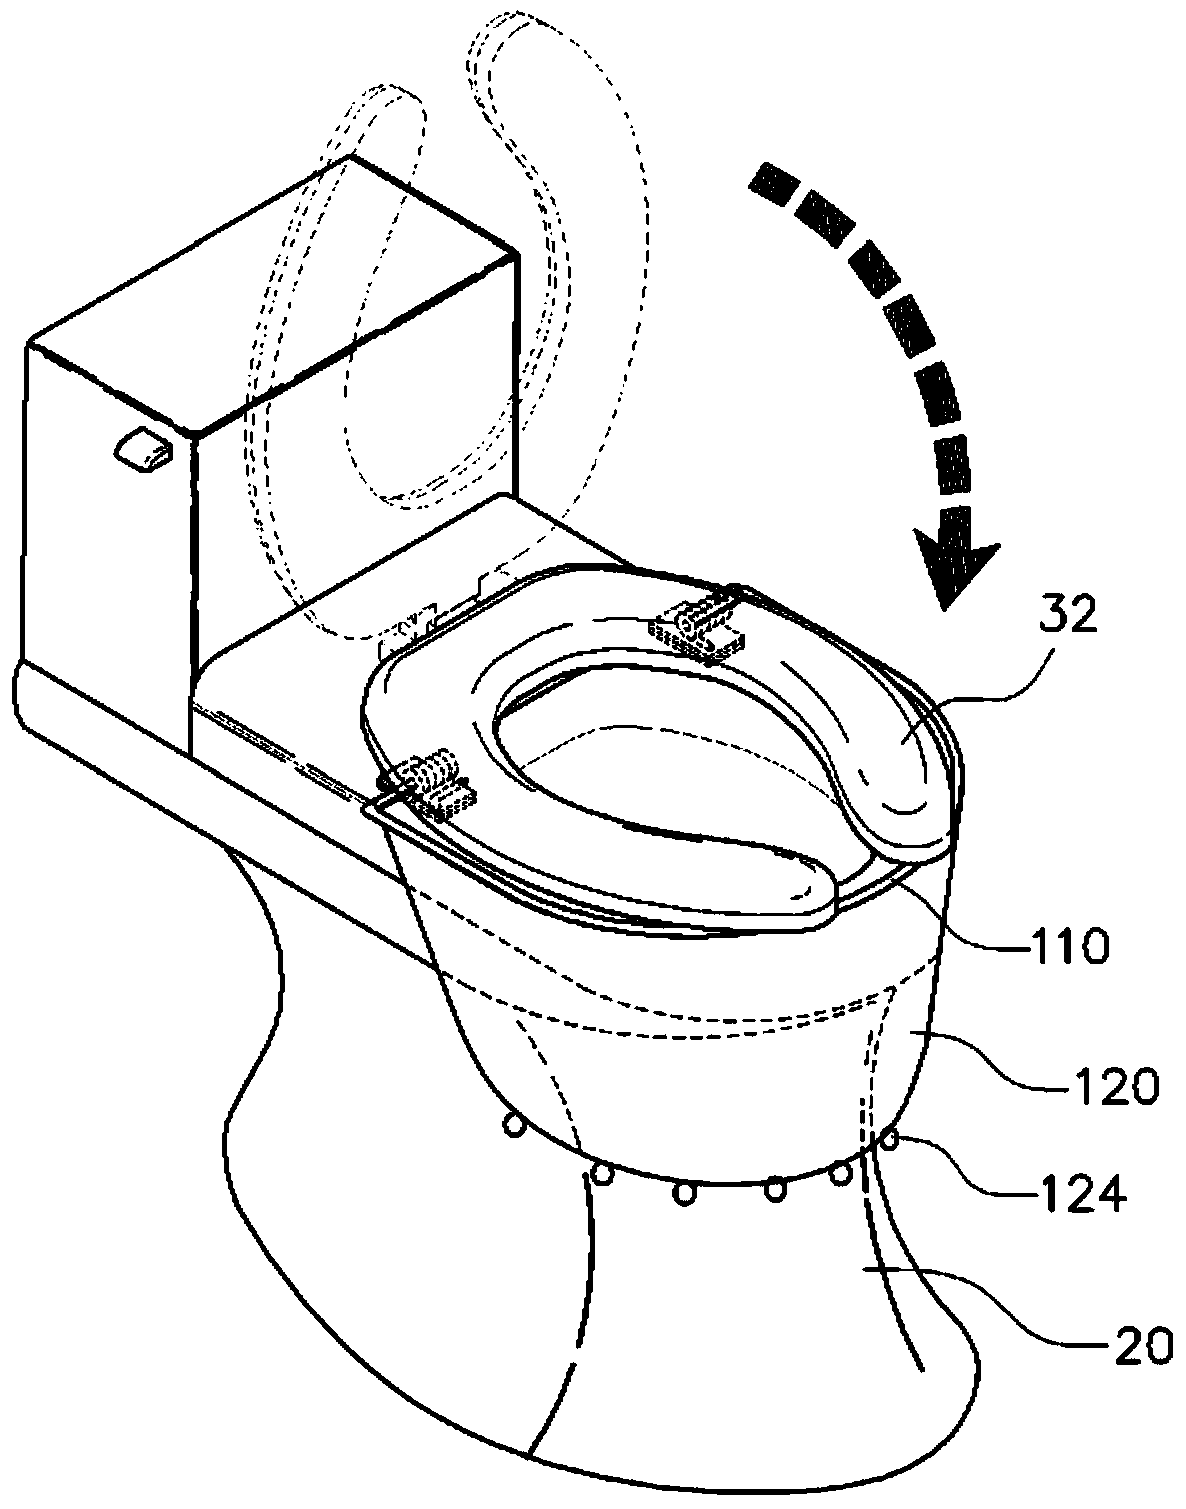 Toilet provided with urine splash prevention apparatus